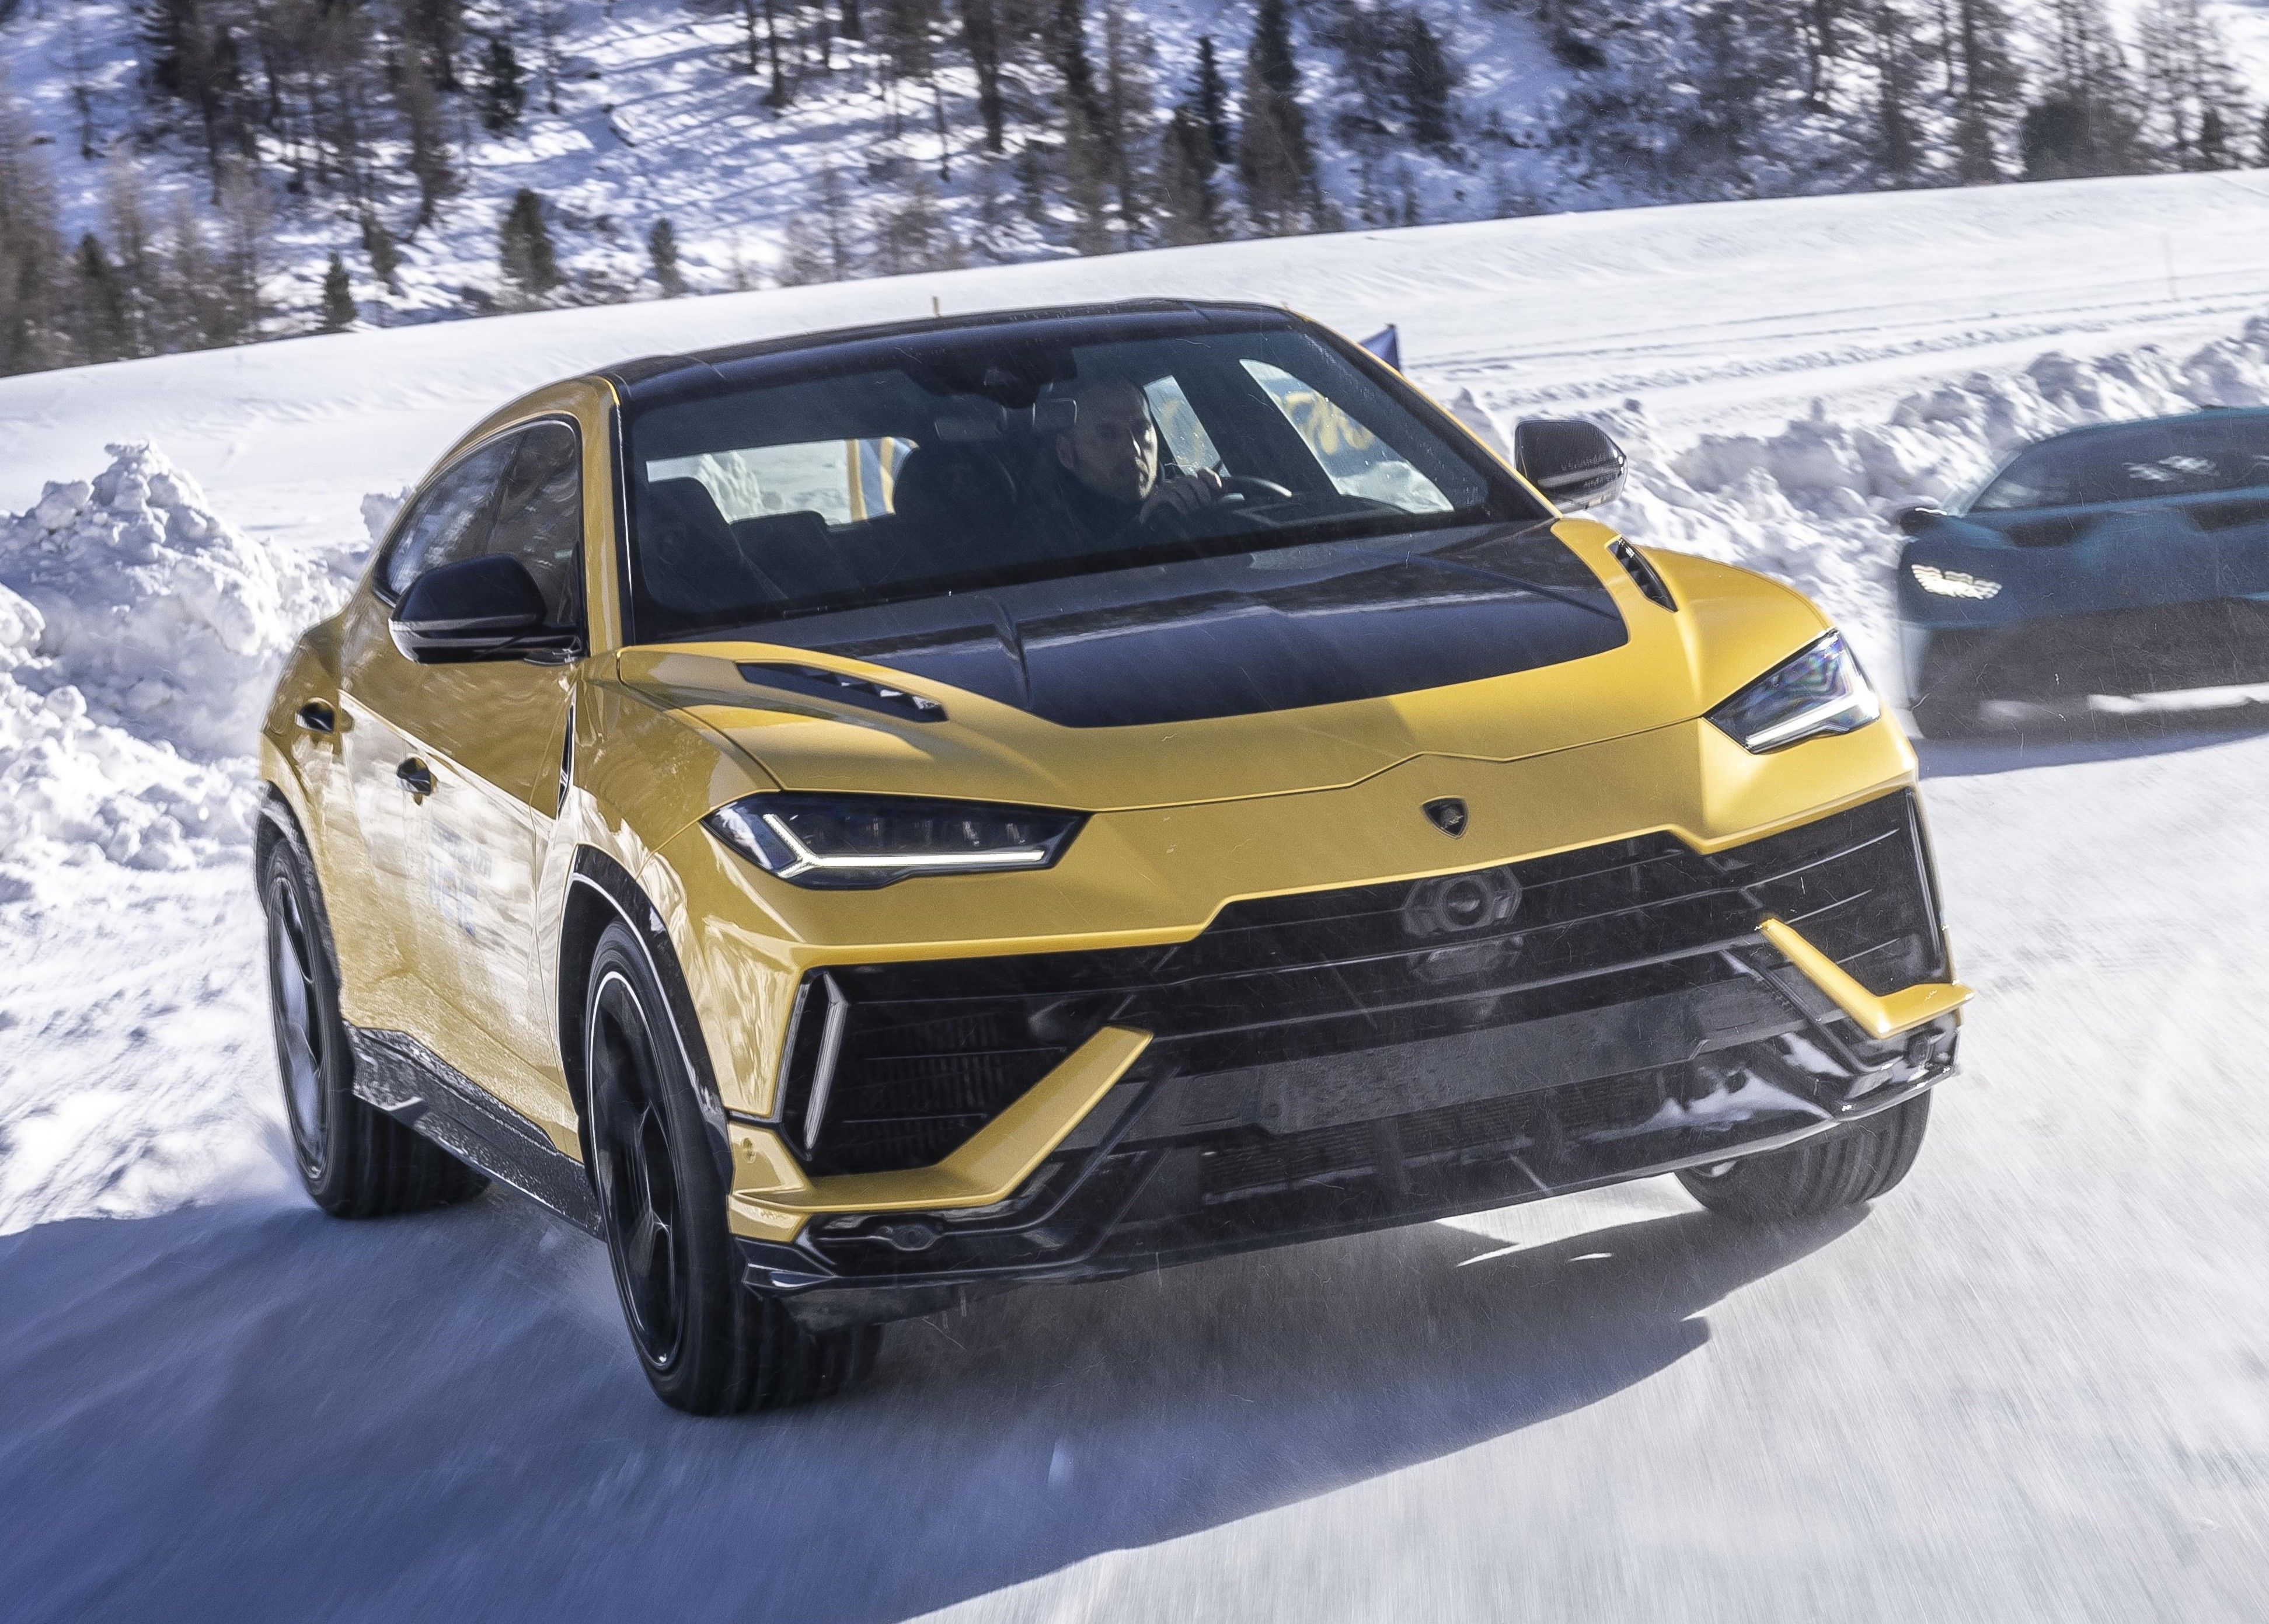 Yellow Lamborghini Urus S driven on a snow-covered road